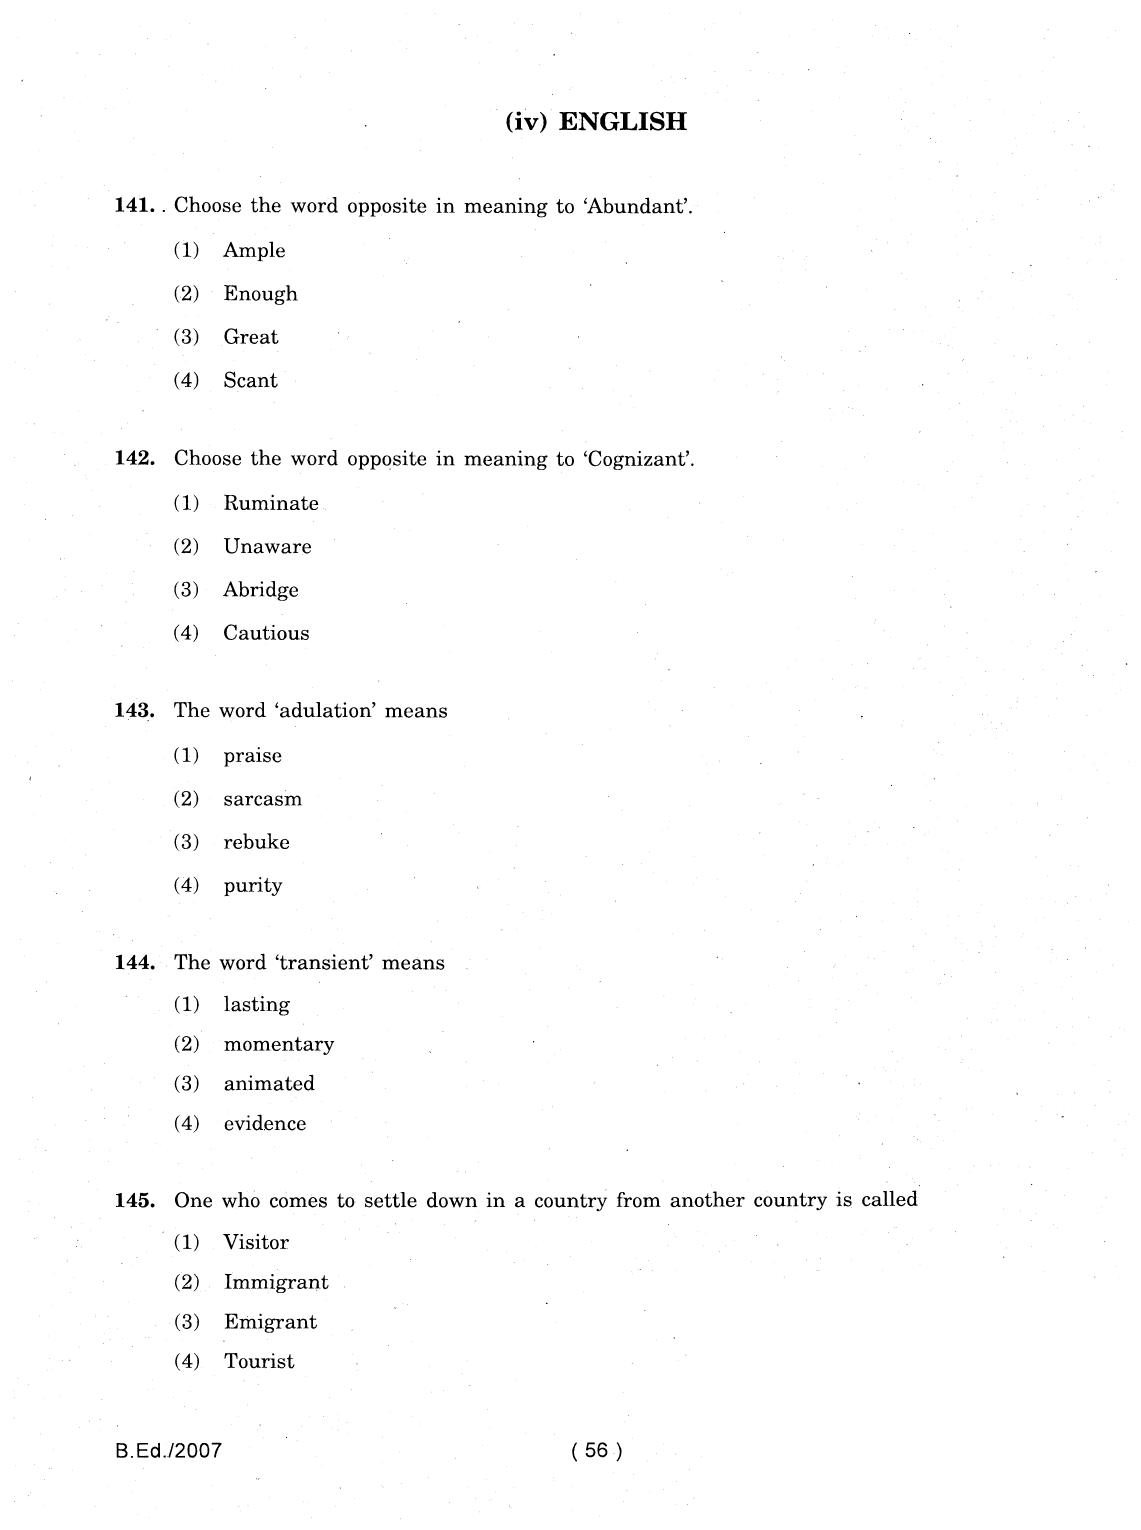 IGNOU B.Ed 2007 Question Paper - Page 56